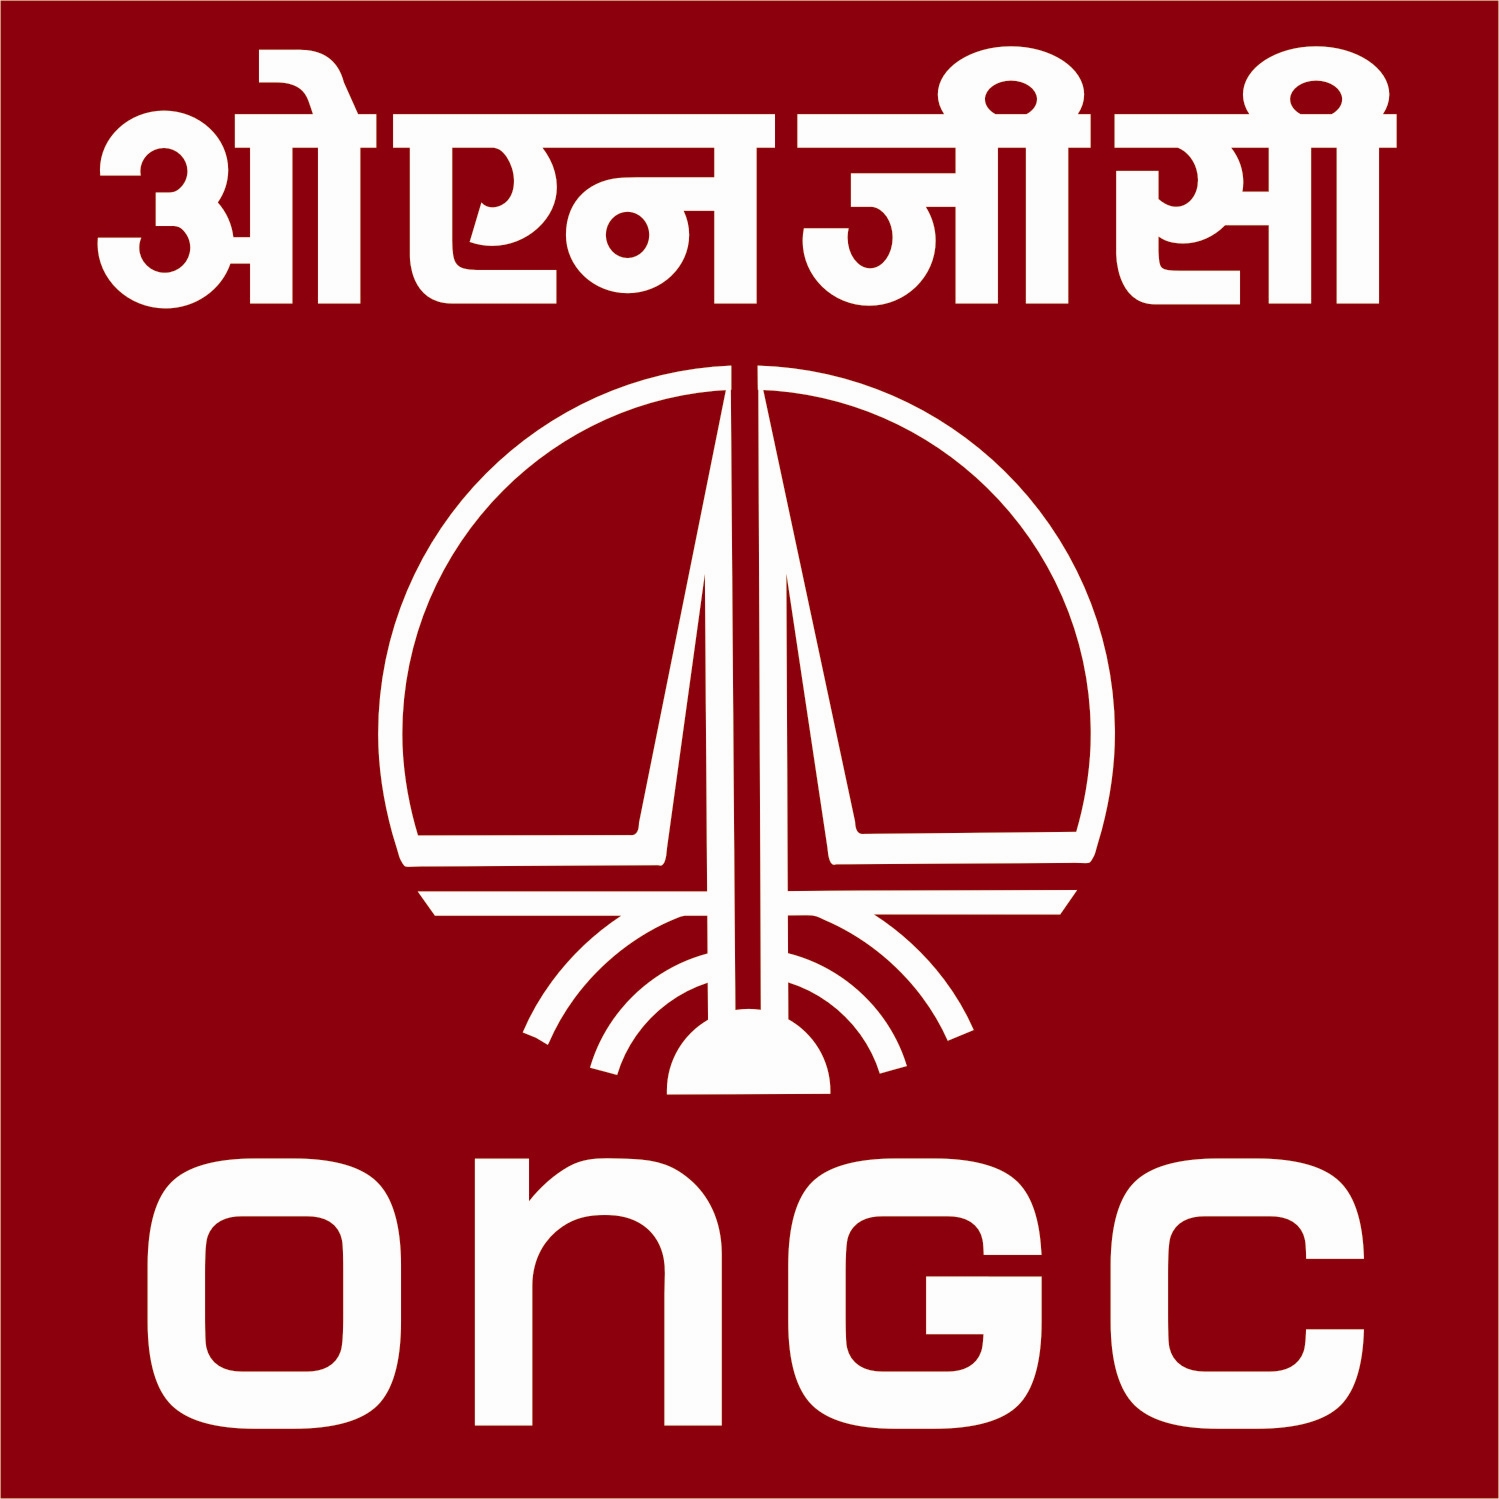 Ongc Vector PNG - 115266